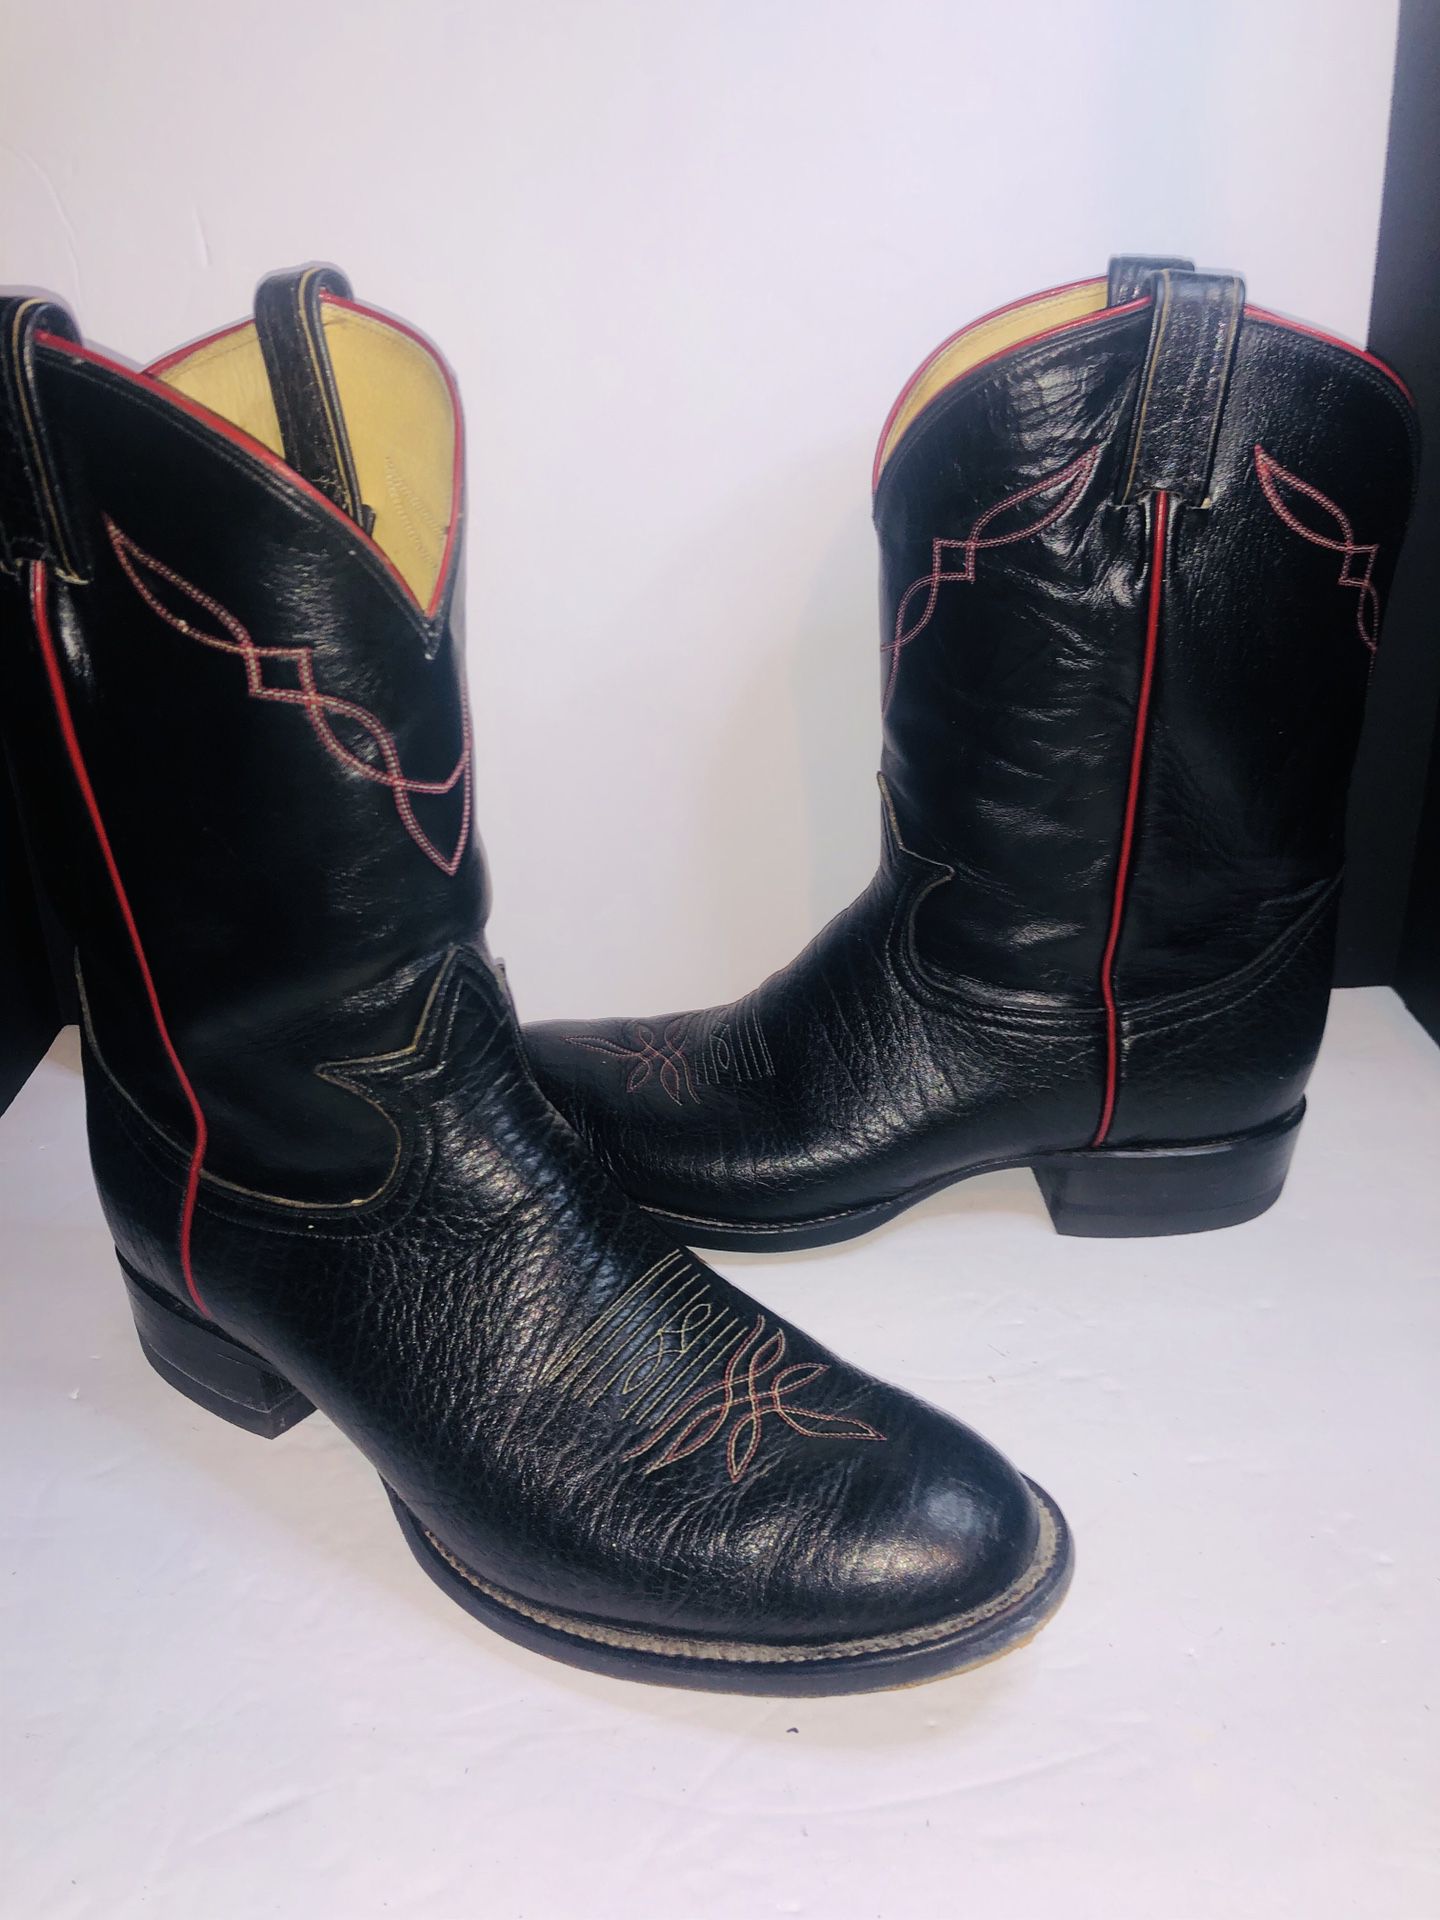 Men’s Tony Lama western boots size 12